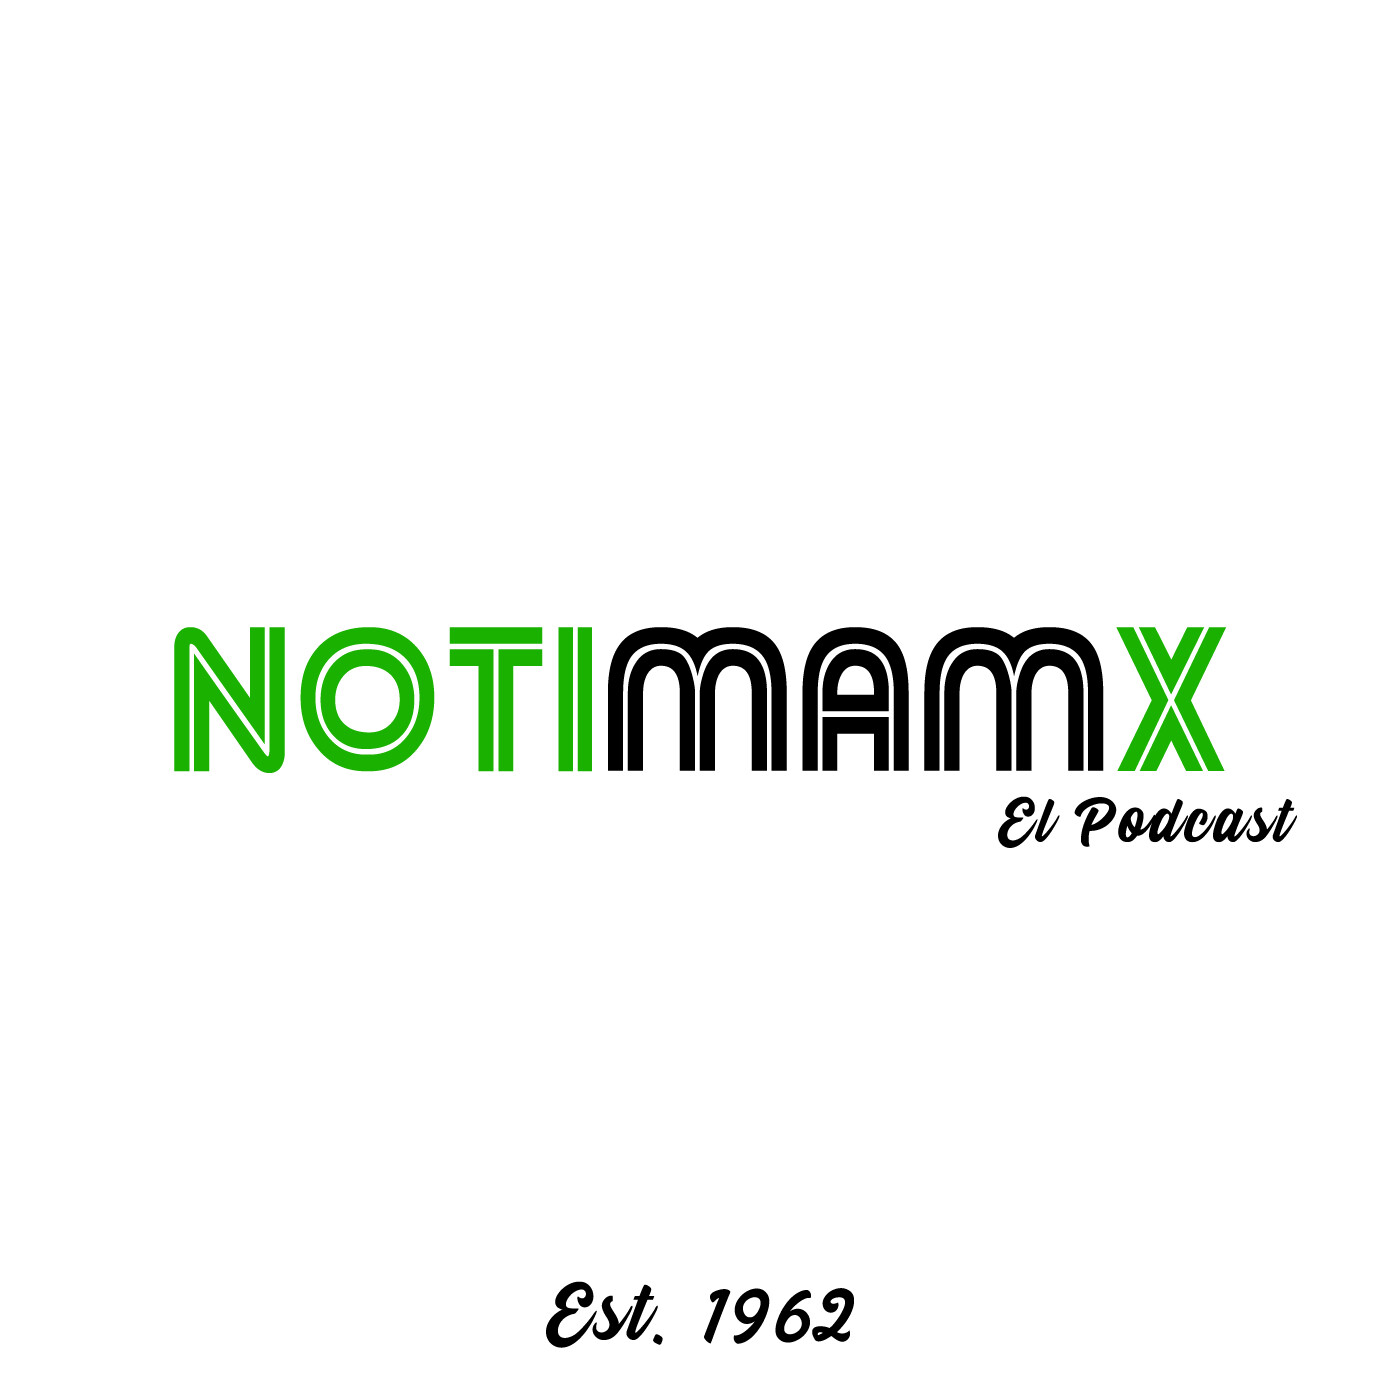 NotiMAMX - Vapeo y Pedro Sola